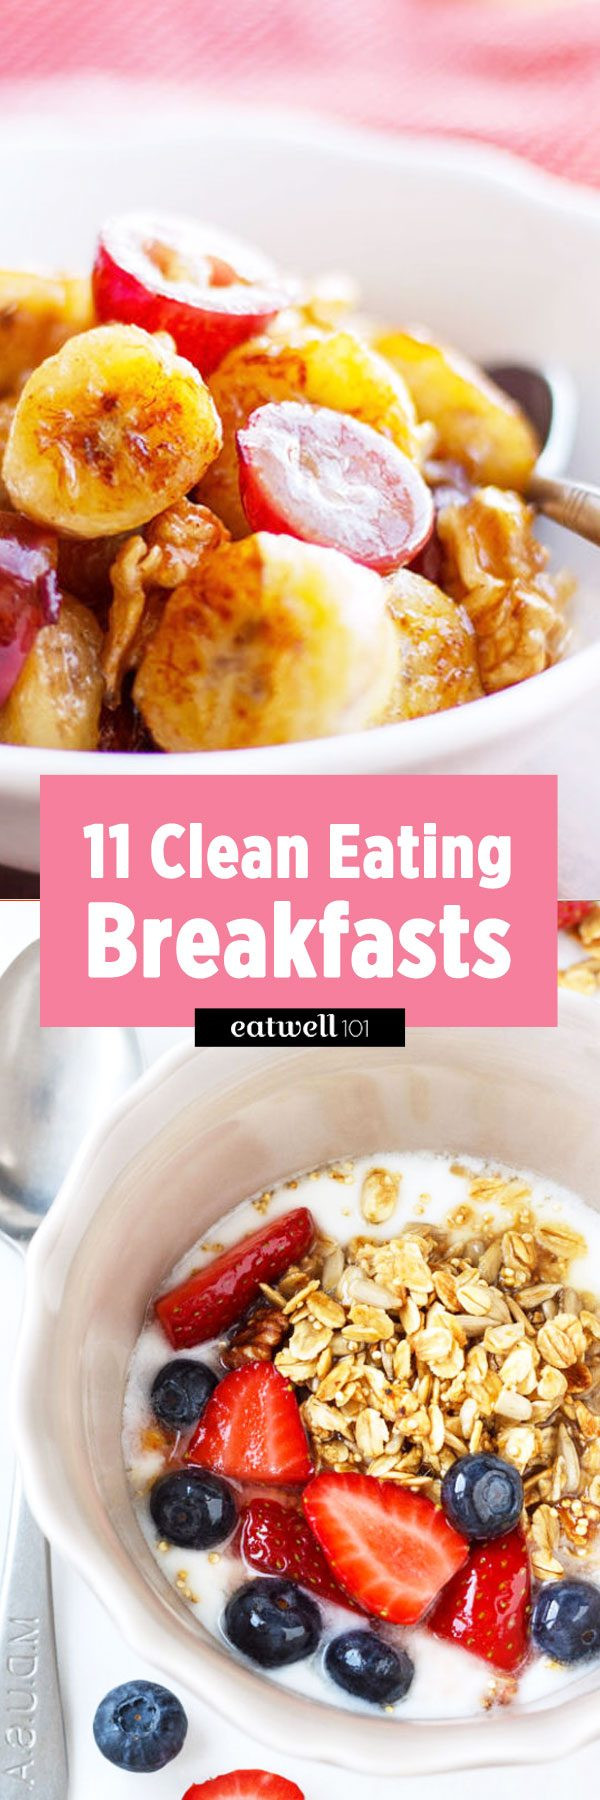 Clean Eating Recipes Breakfast
 Clean Eating Breakfast Recipes — Eatwell101